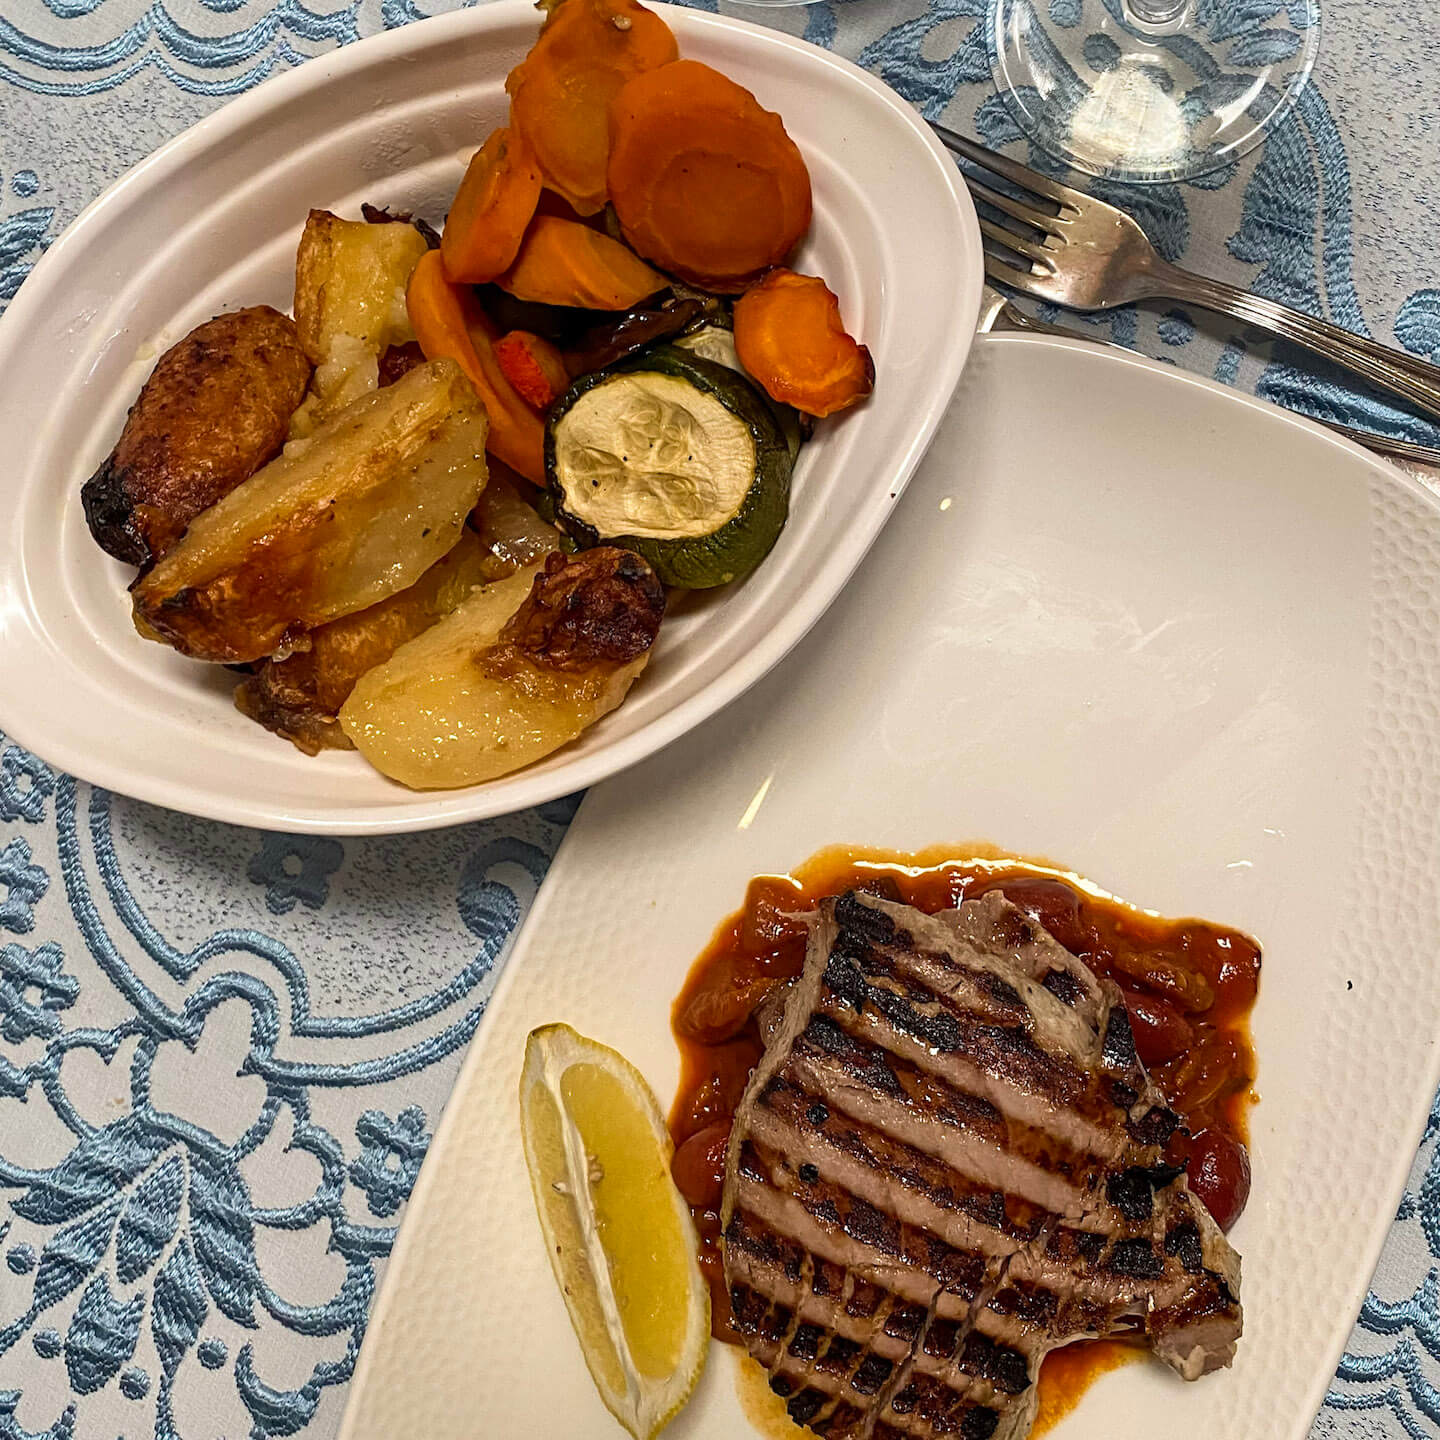 Tuna steak and vegetables